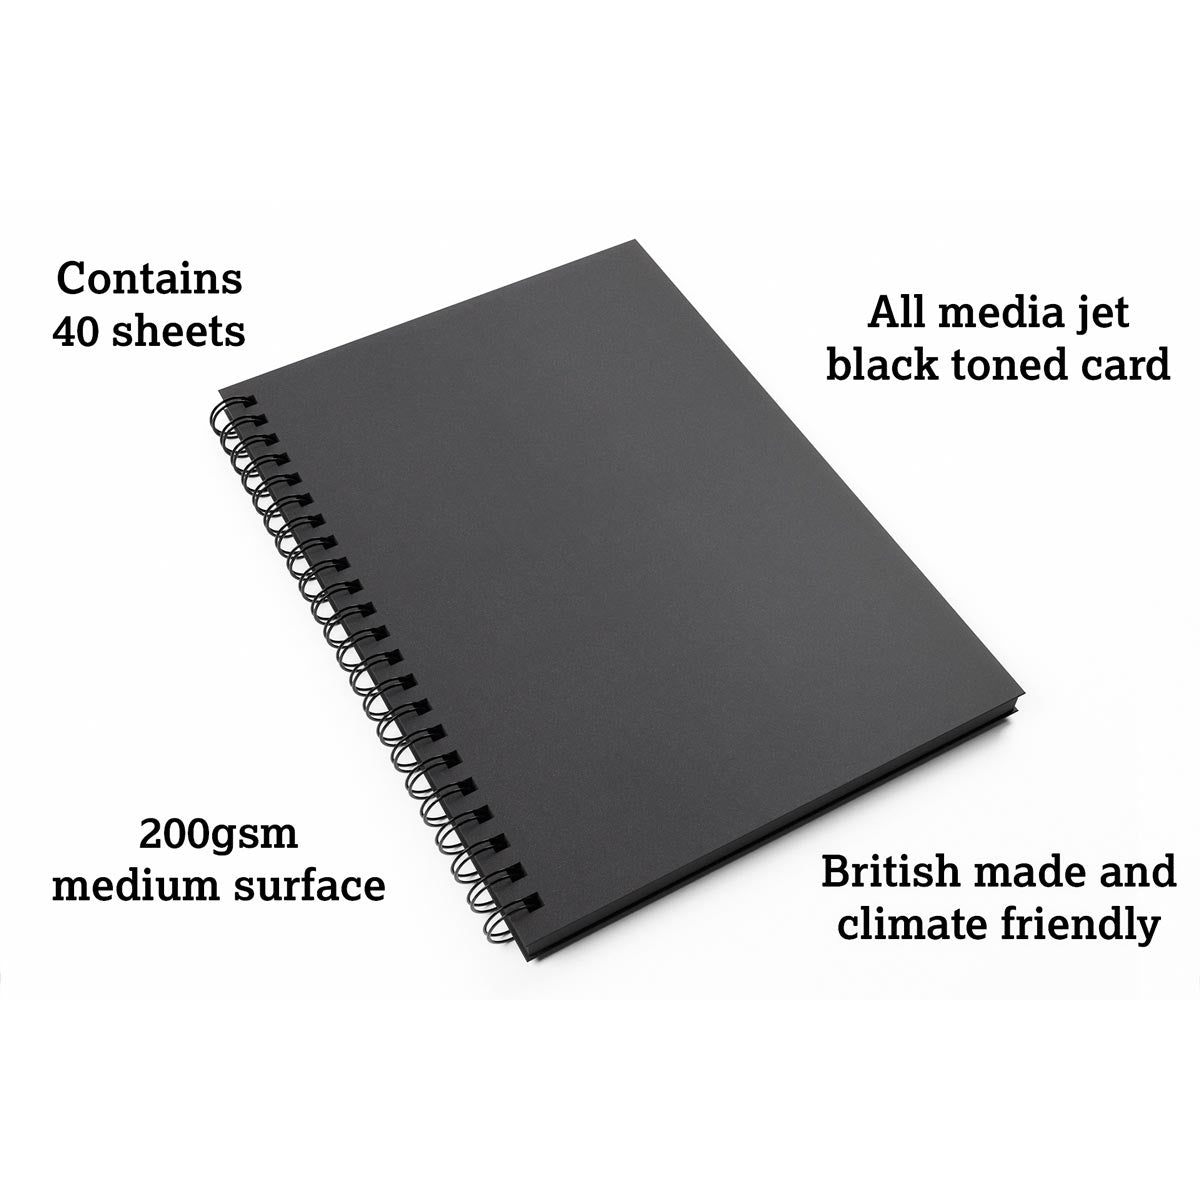 Artgecko - Shady Black Paper Sketchbook - A4 Portrait